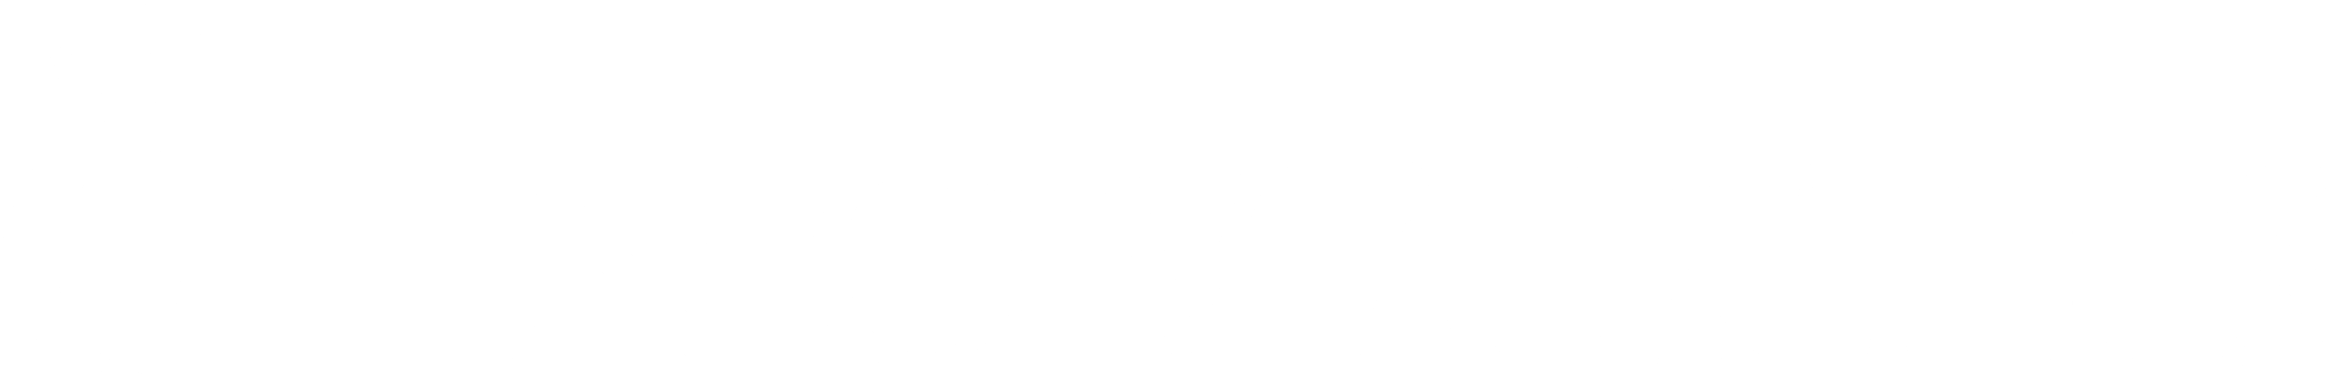 Download Novartis Logo Black And White Fortnite Logo Transparent White Png Image With No Background Pngkey Com